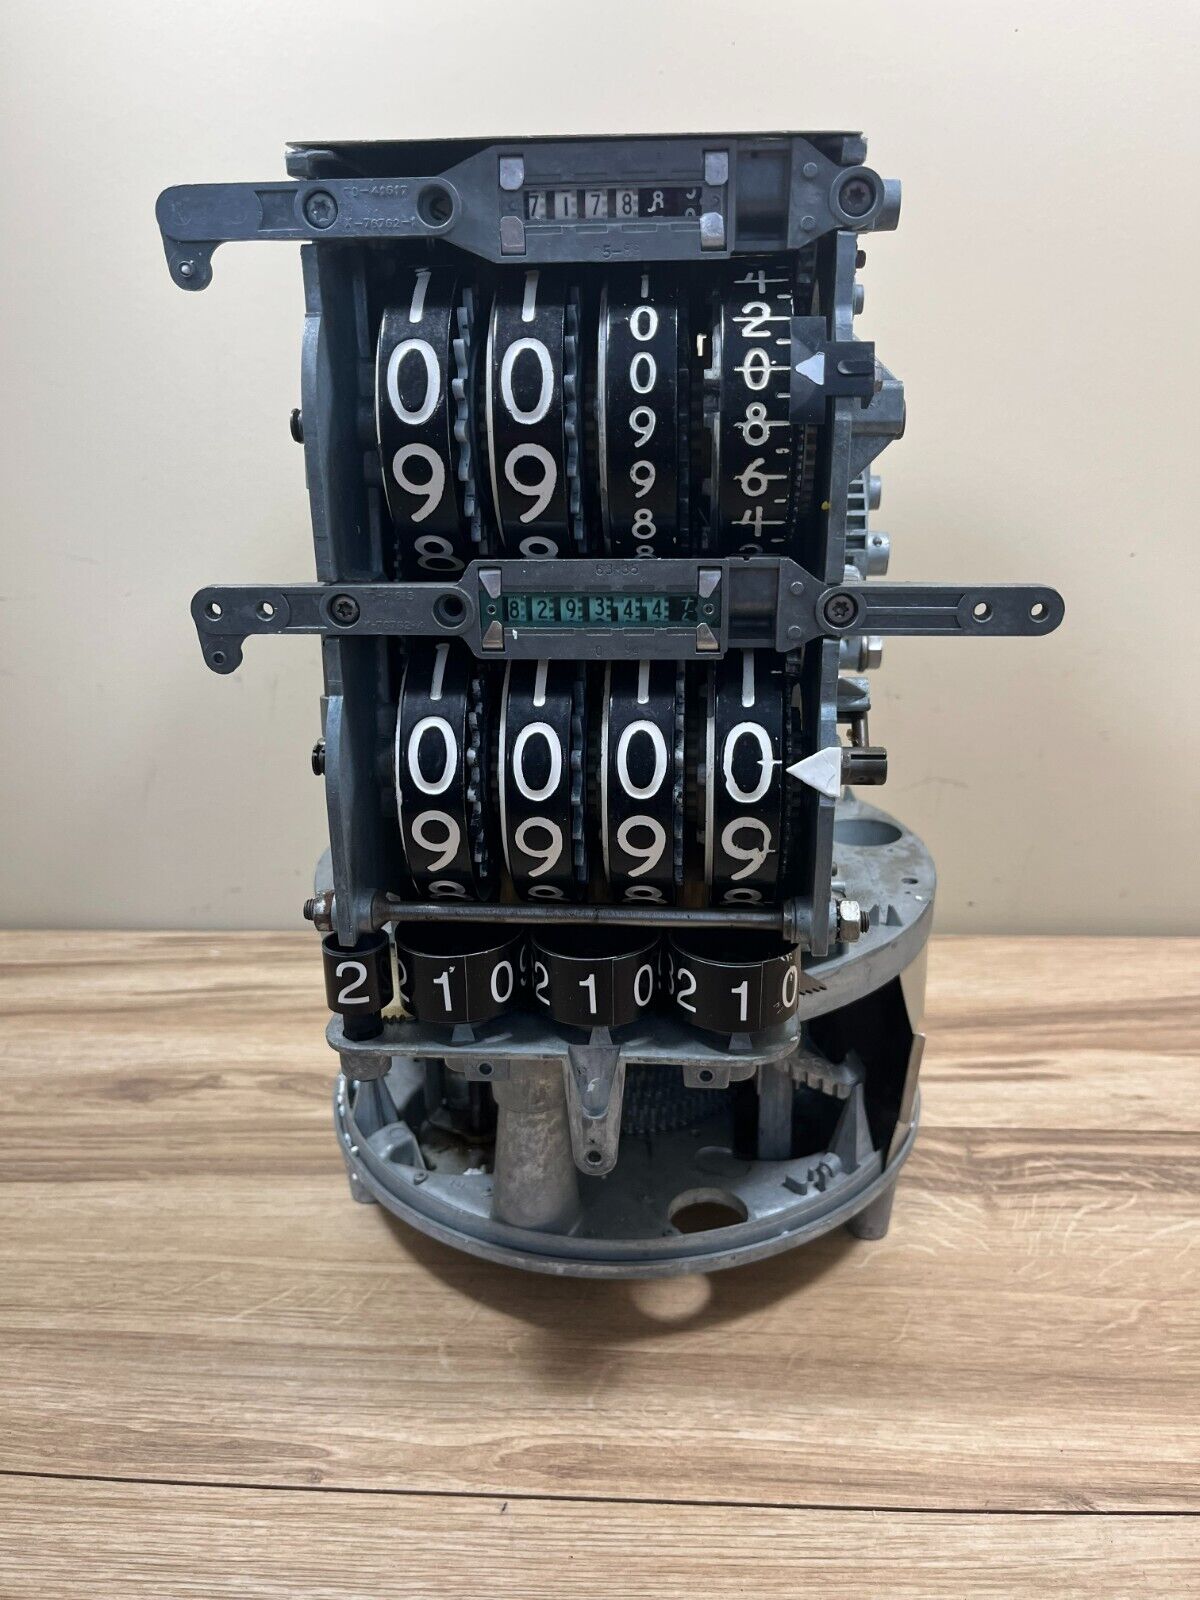 Veeder Root Gas Pump Meter Pump Mechanical  Fuel Calculator Vintage